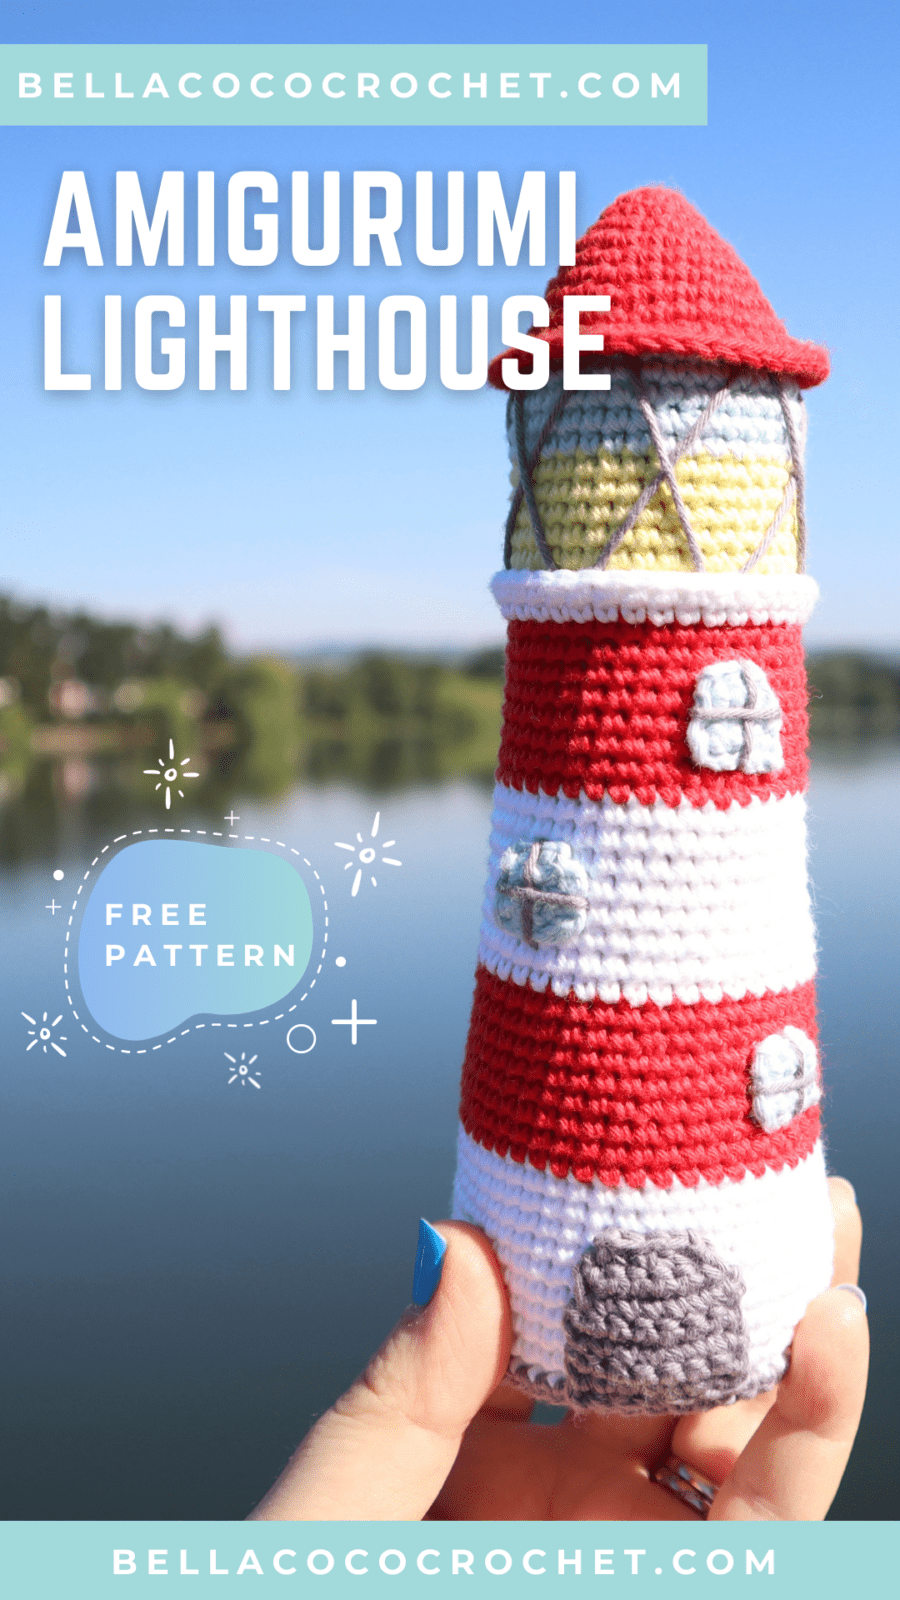 FREE PATTERN: Amigurumi Lighthouse